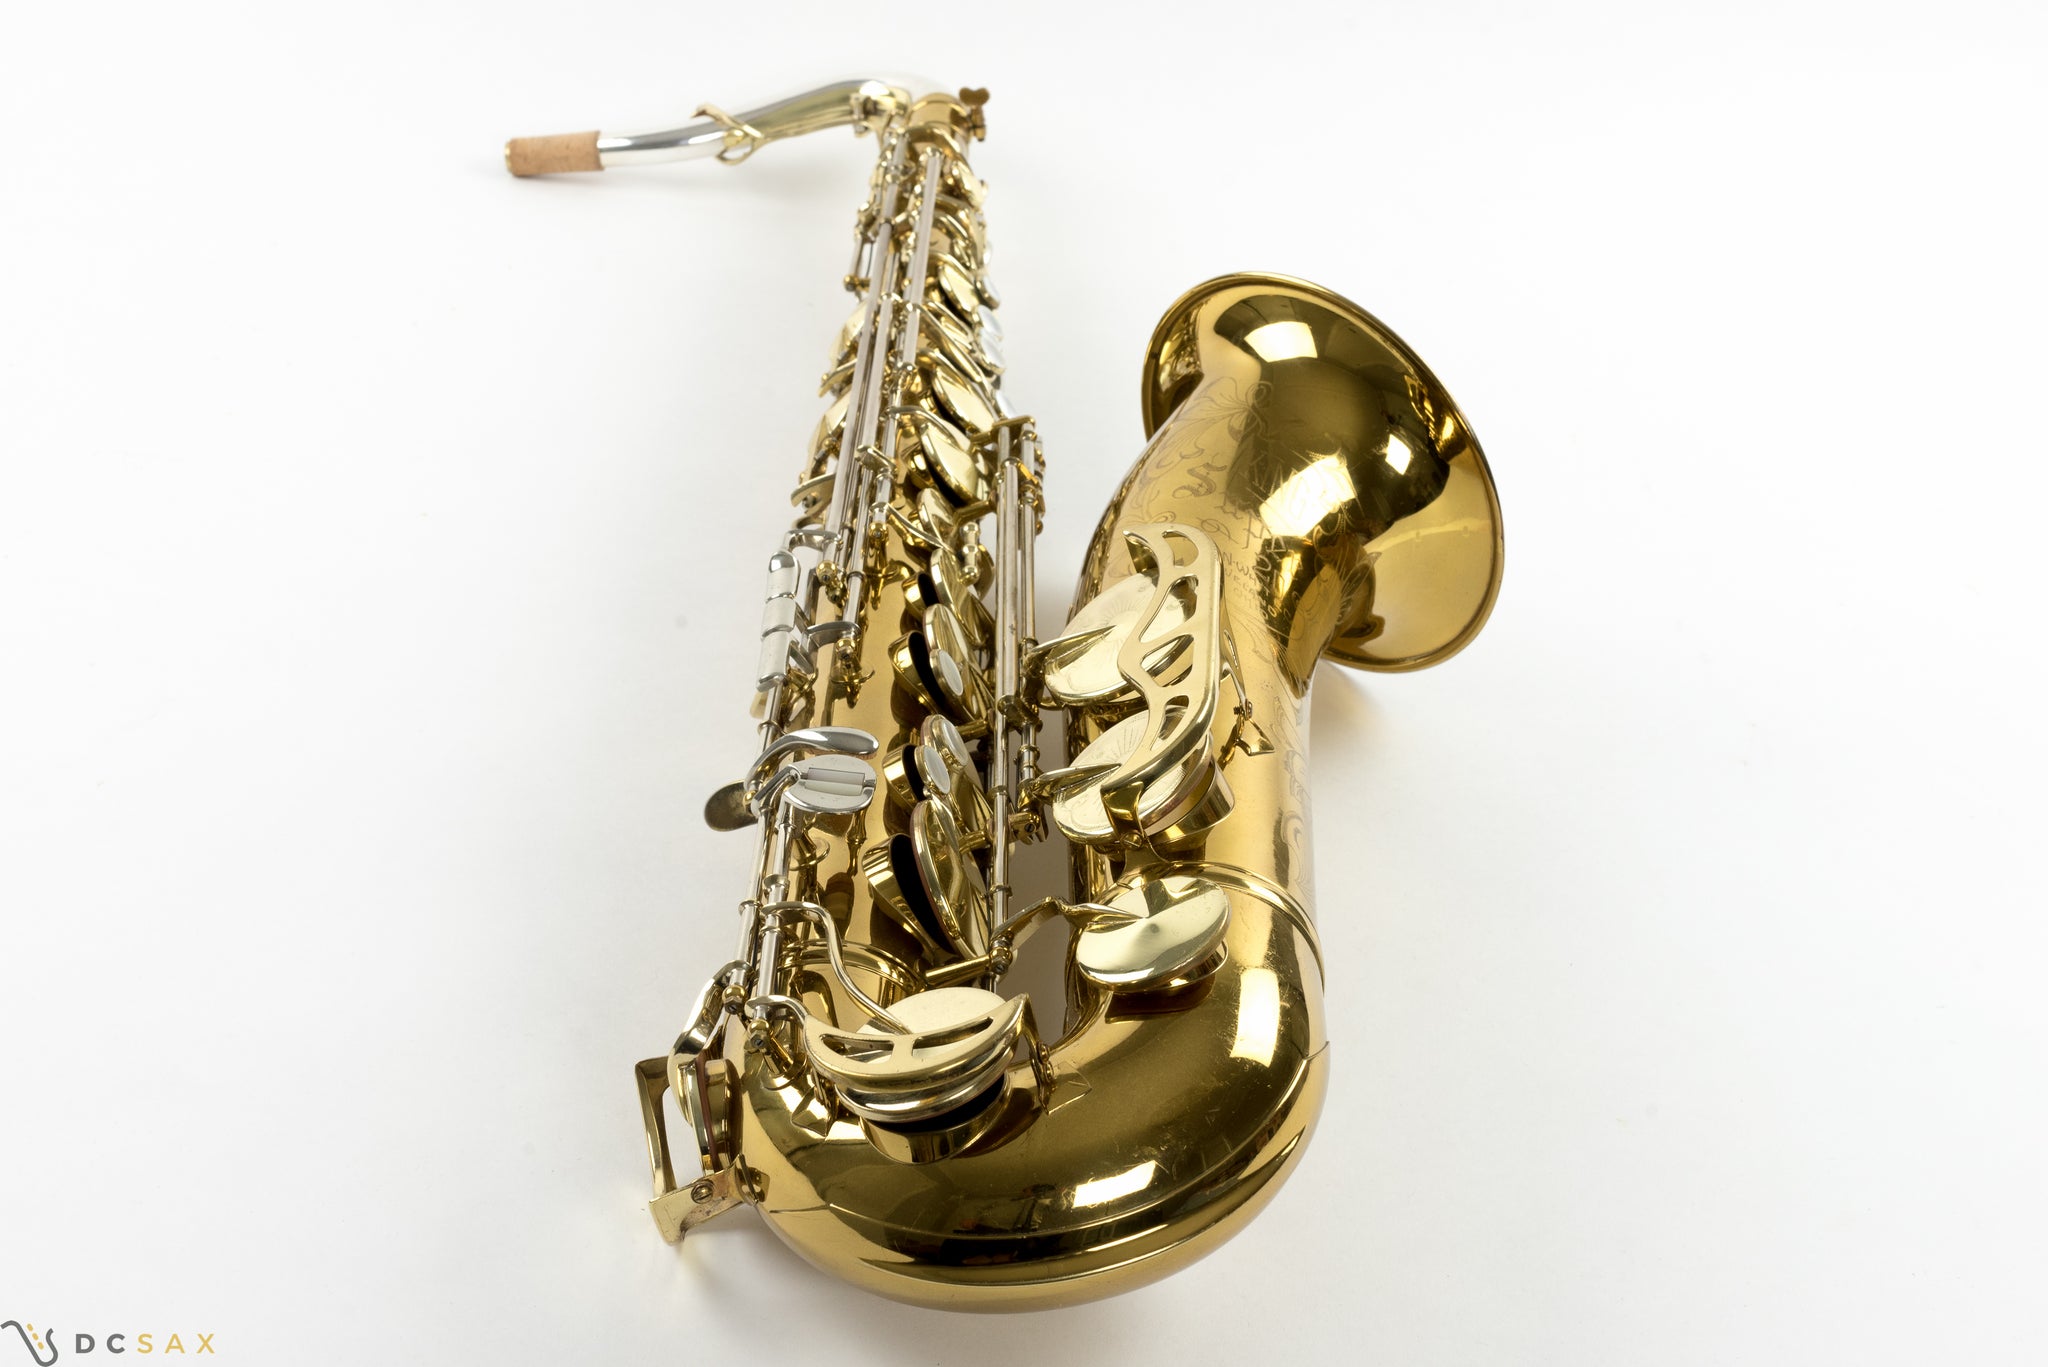 King Super 20 Tenor Saxophone, 99%+ Original Lacquer, Cleveland Era, Video